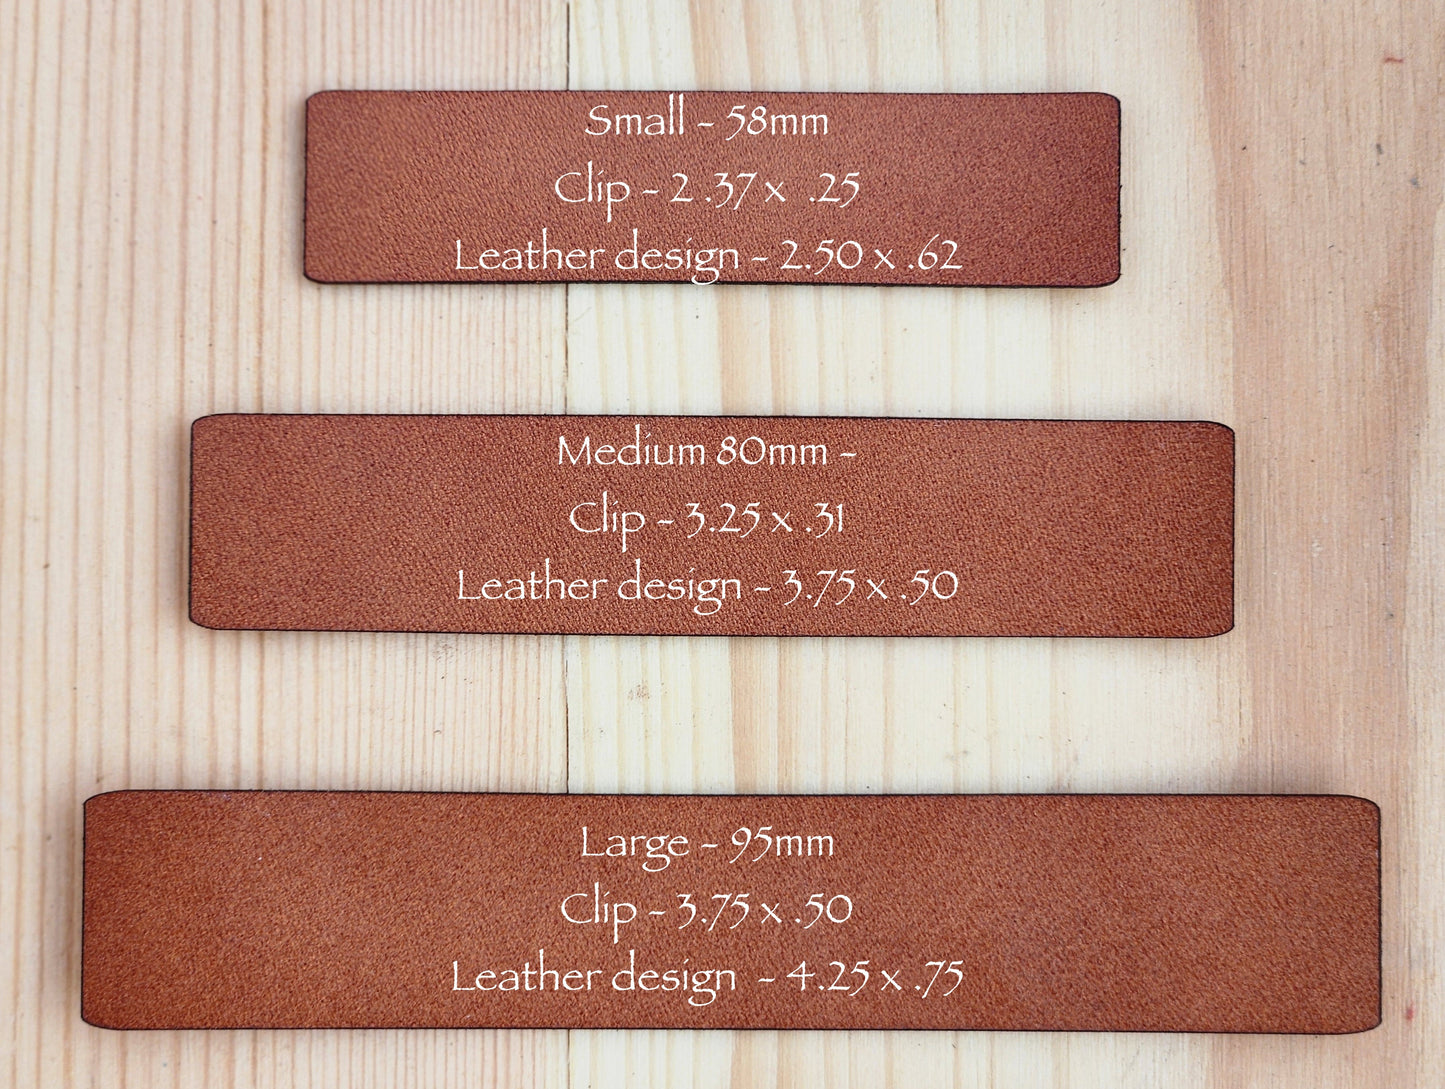 Honeycomb design leather barrette - French Barrette